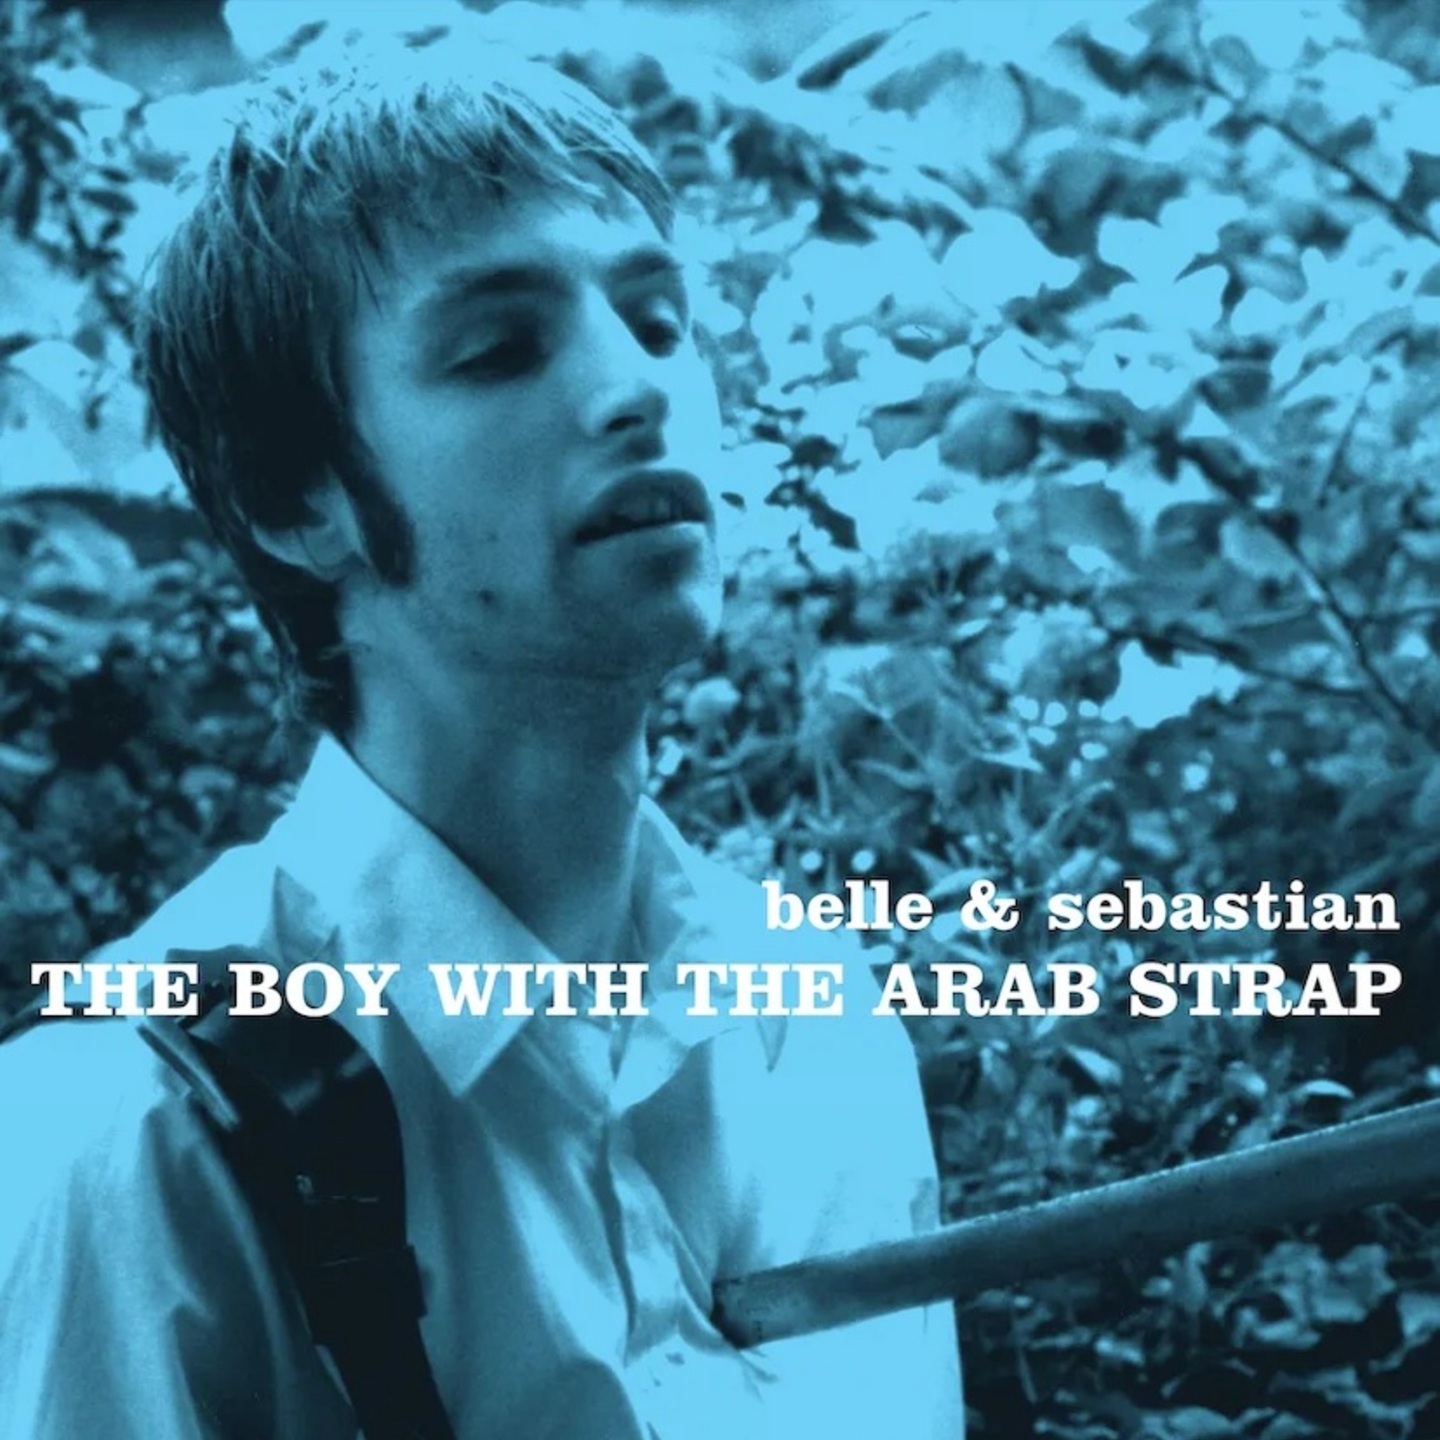 BELLE & SEBASTIAN - The Boy With the Arab Strap (25th Anniversary Clear Pale Blue vinyl)